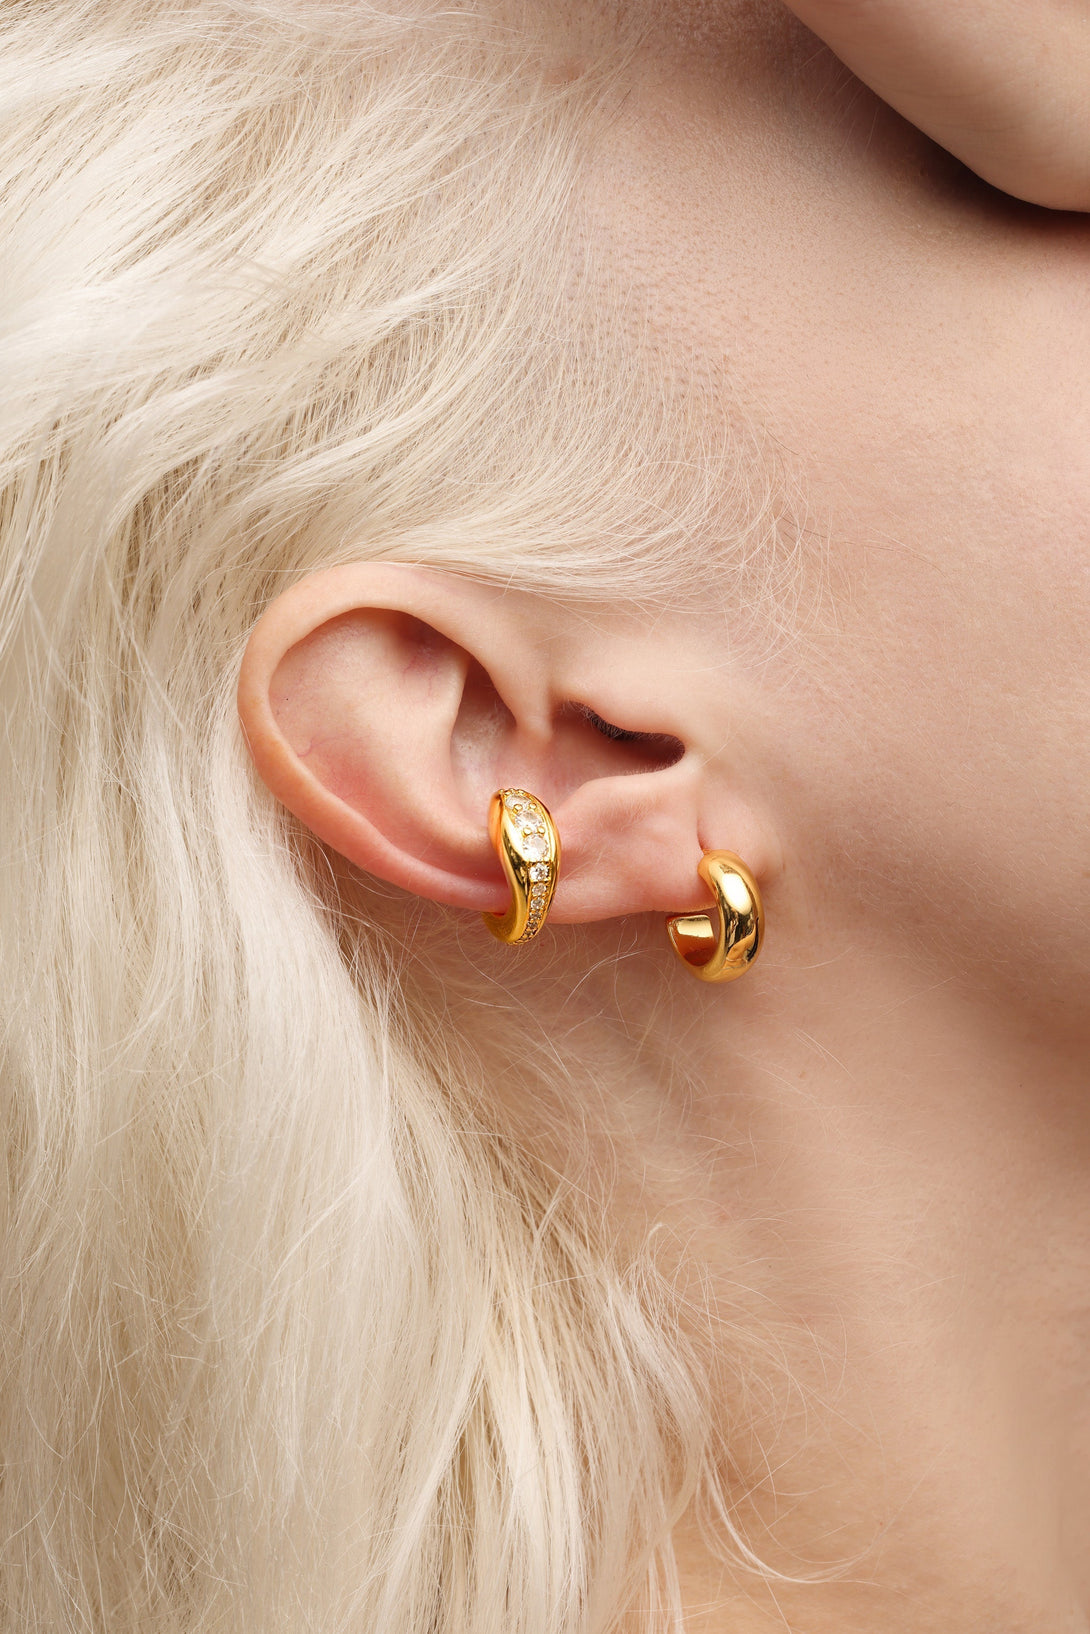 Gold Simple Huggie Hoop Earrings and Ear Cuff Set - Classicharms